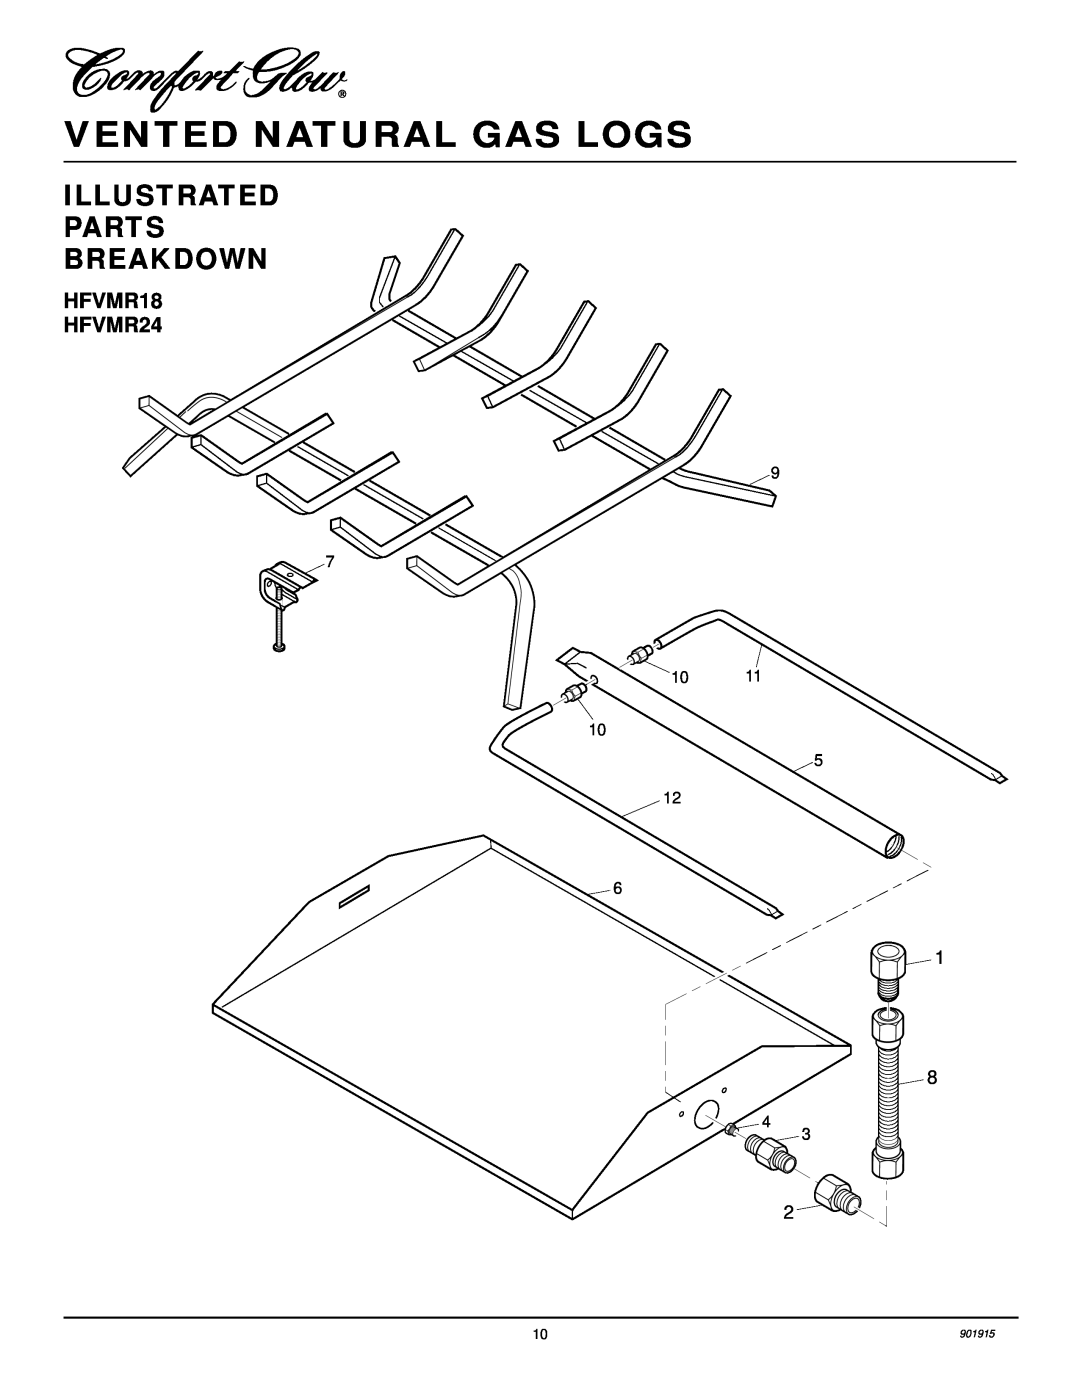 Desa installation manual Illustrated Parts Breakdown, Vented Natural Gas Logs, HFVMR18 HFVMR24, 901915 